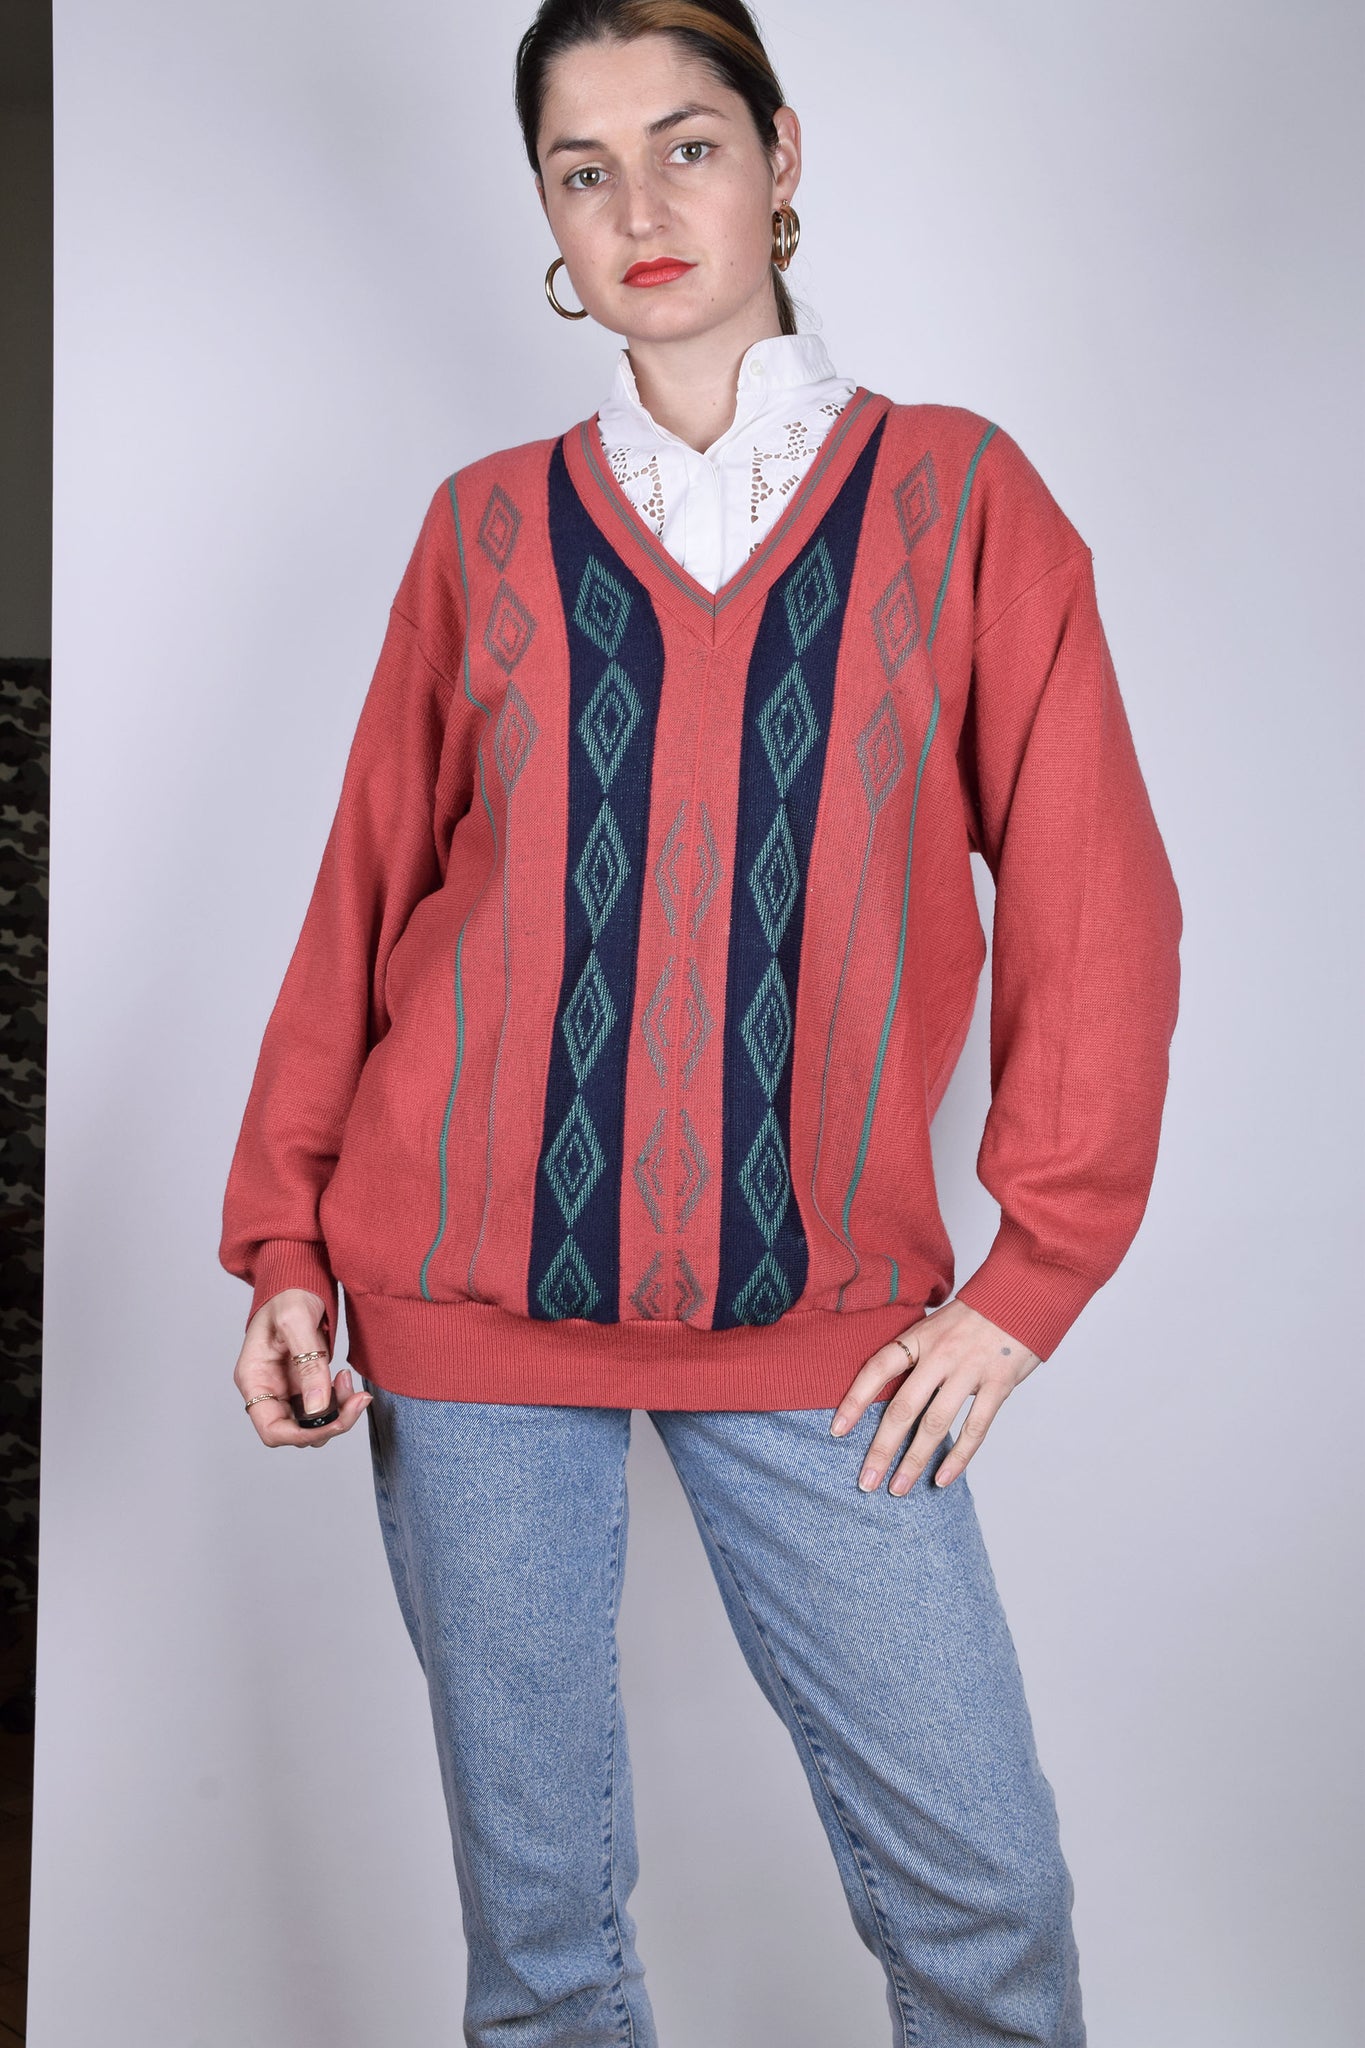 Vintage 90s 80s Geometric Print Retro Sweater Vintage Graphic Knit Sweater Wool knit sweater Vintage Men's Pullover